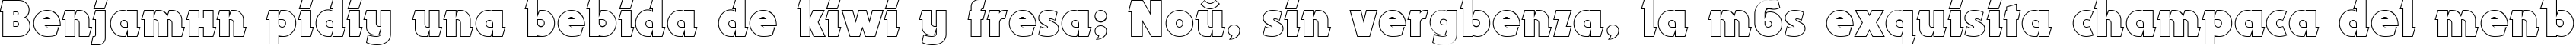 Пример написания шрифтом DynarOutline Bold текста на испанском